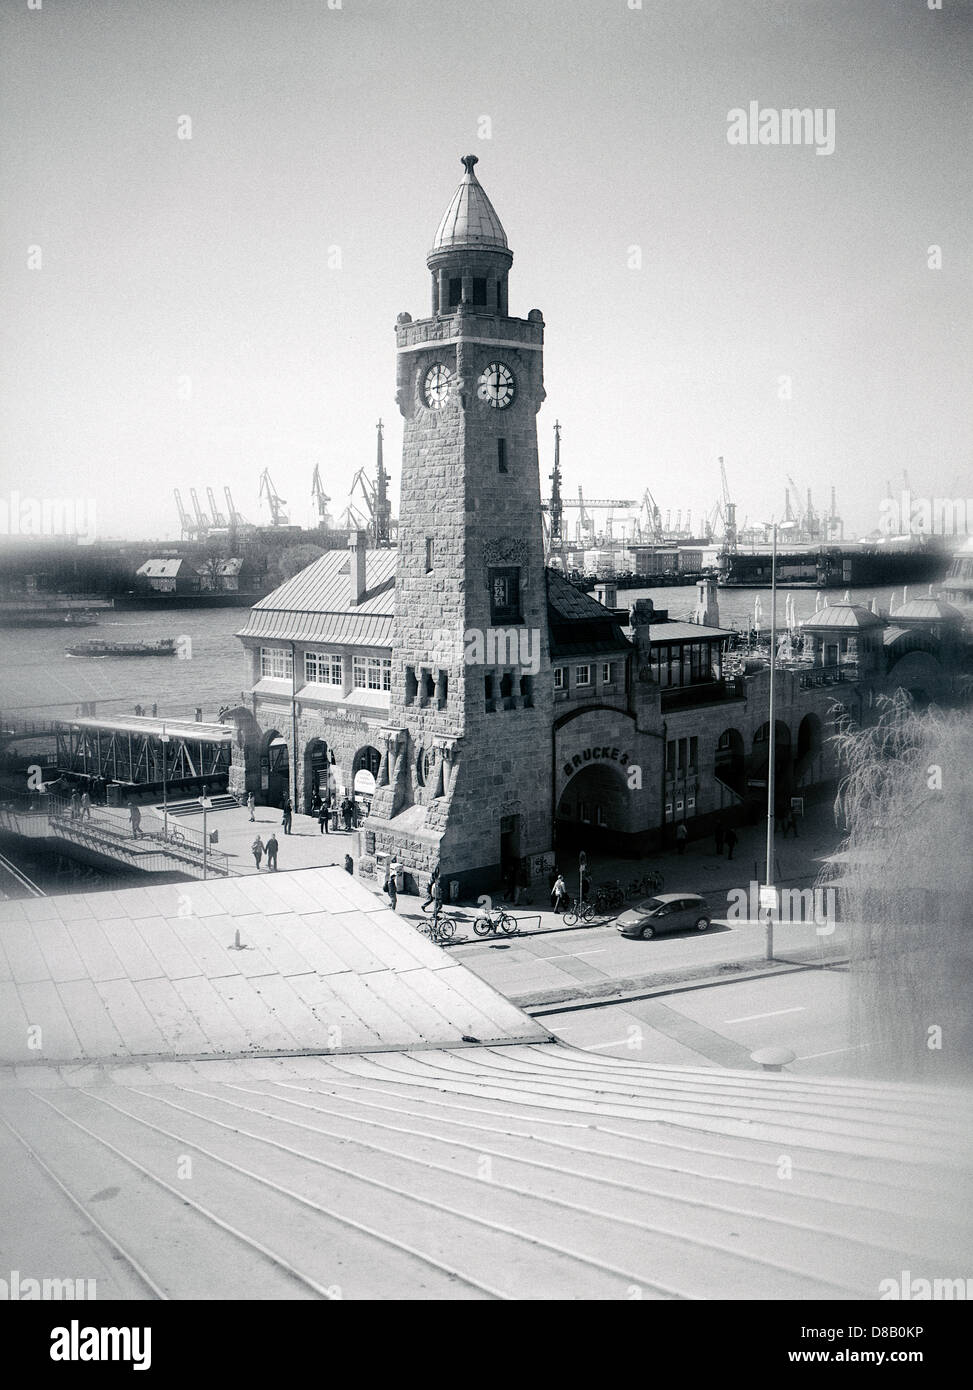 Pegelturm (gauge tower) of Sankt Pauli Landungsbrücken with Blohm+Voss shipyard at the back in the port of Hamburg. Stock Photo